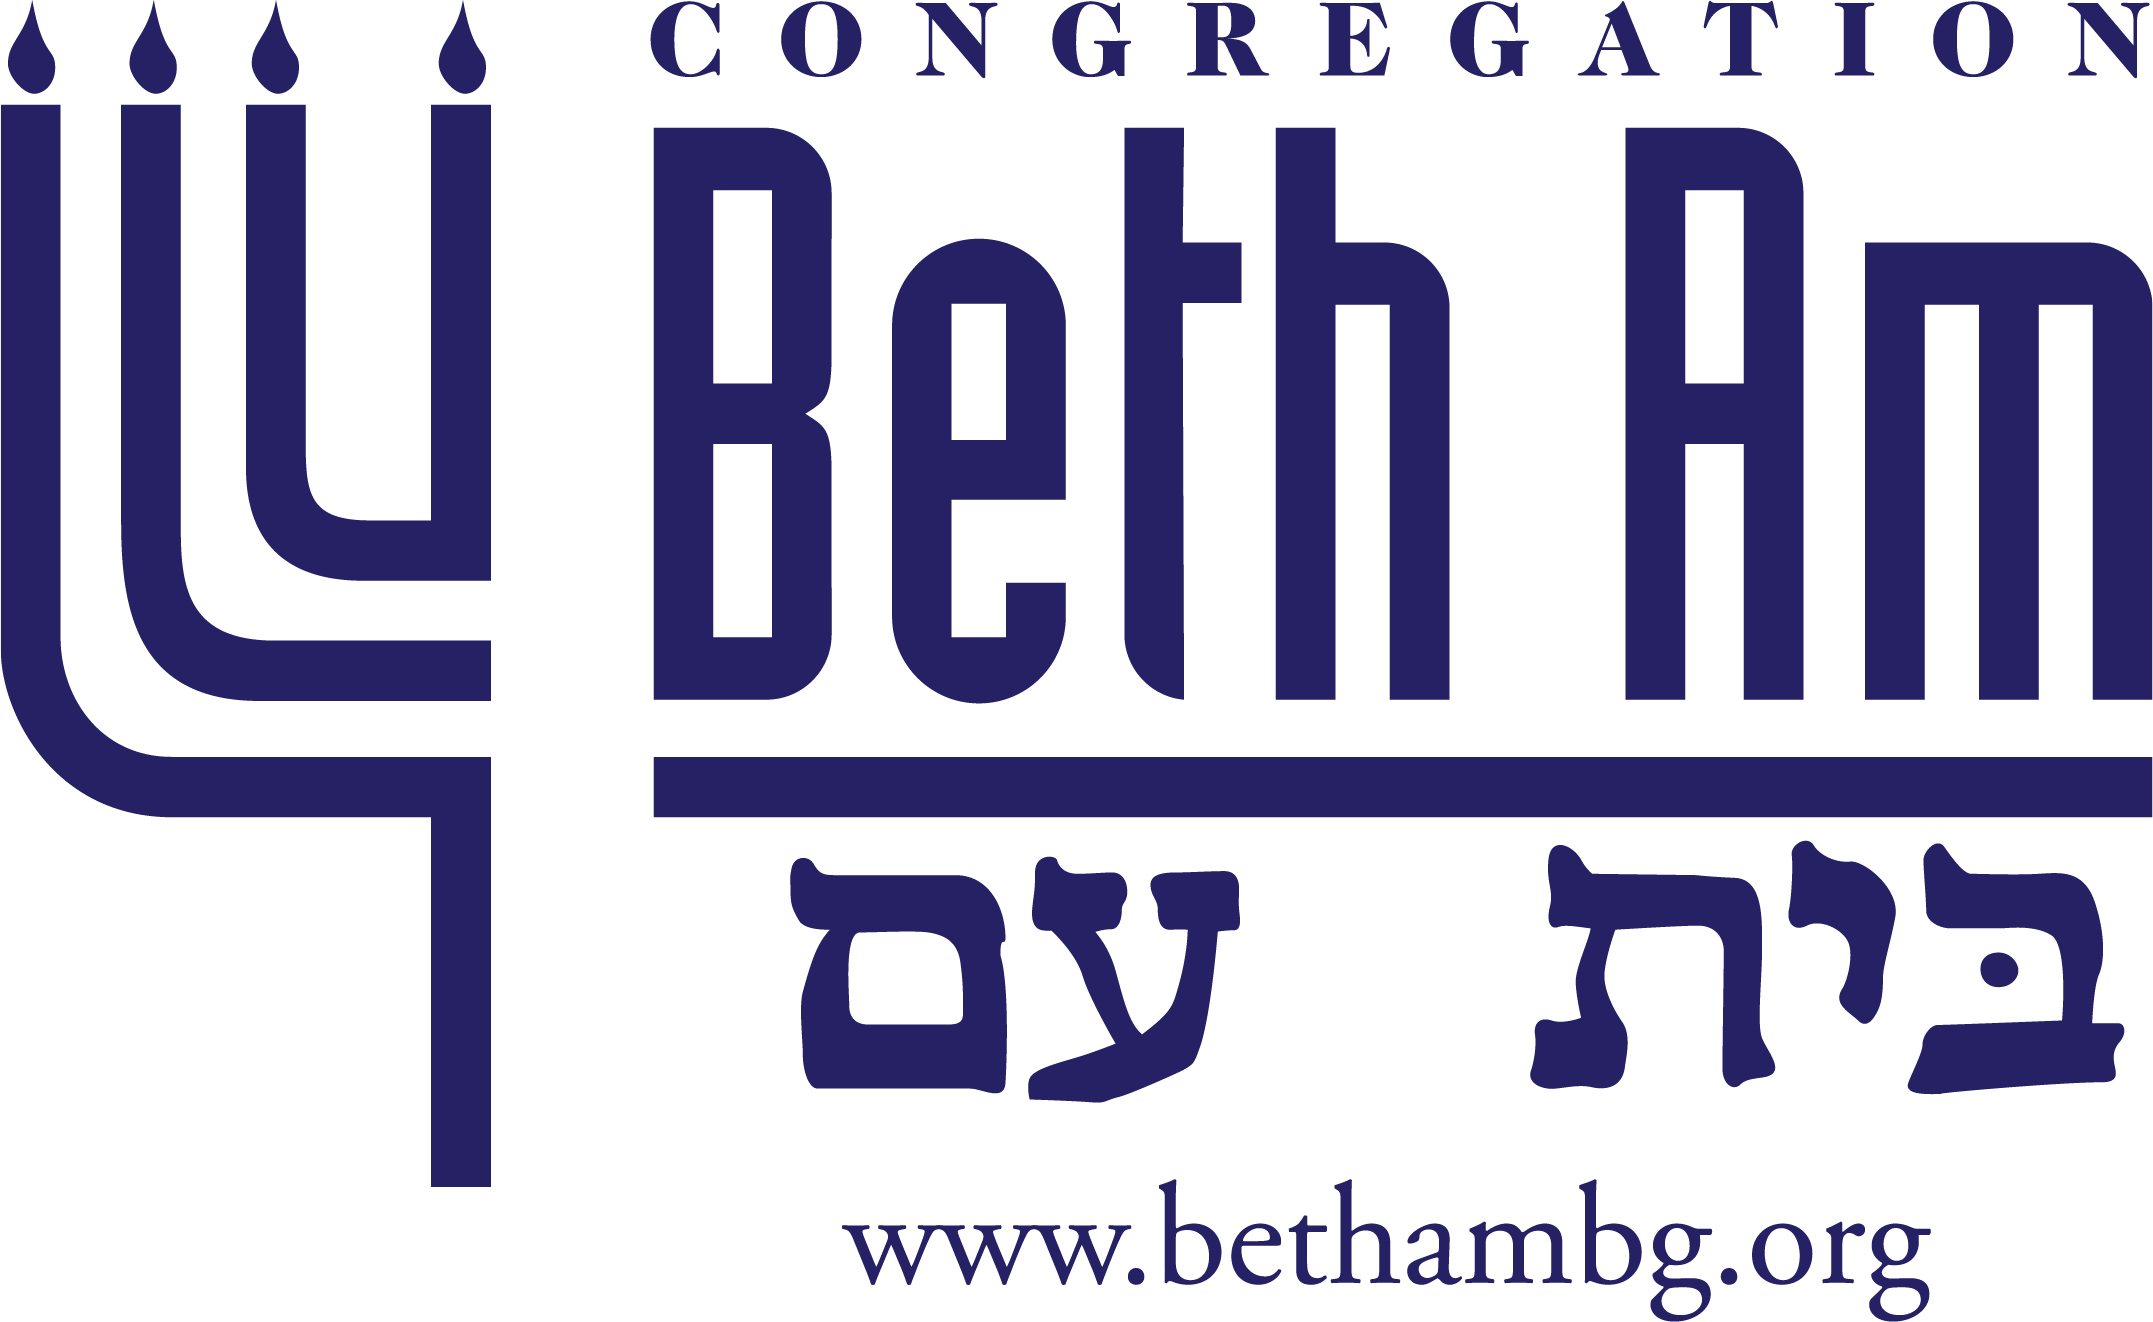 Congregation Beth Am